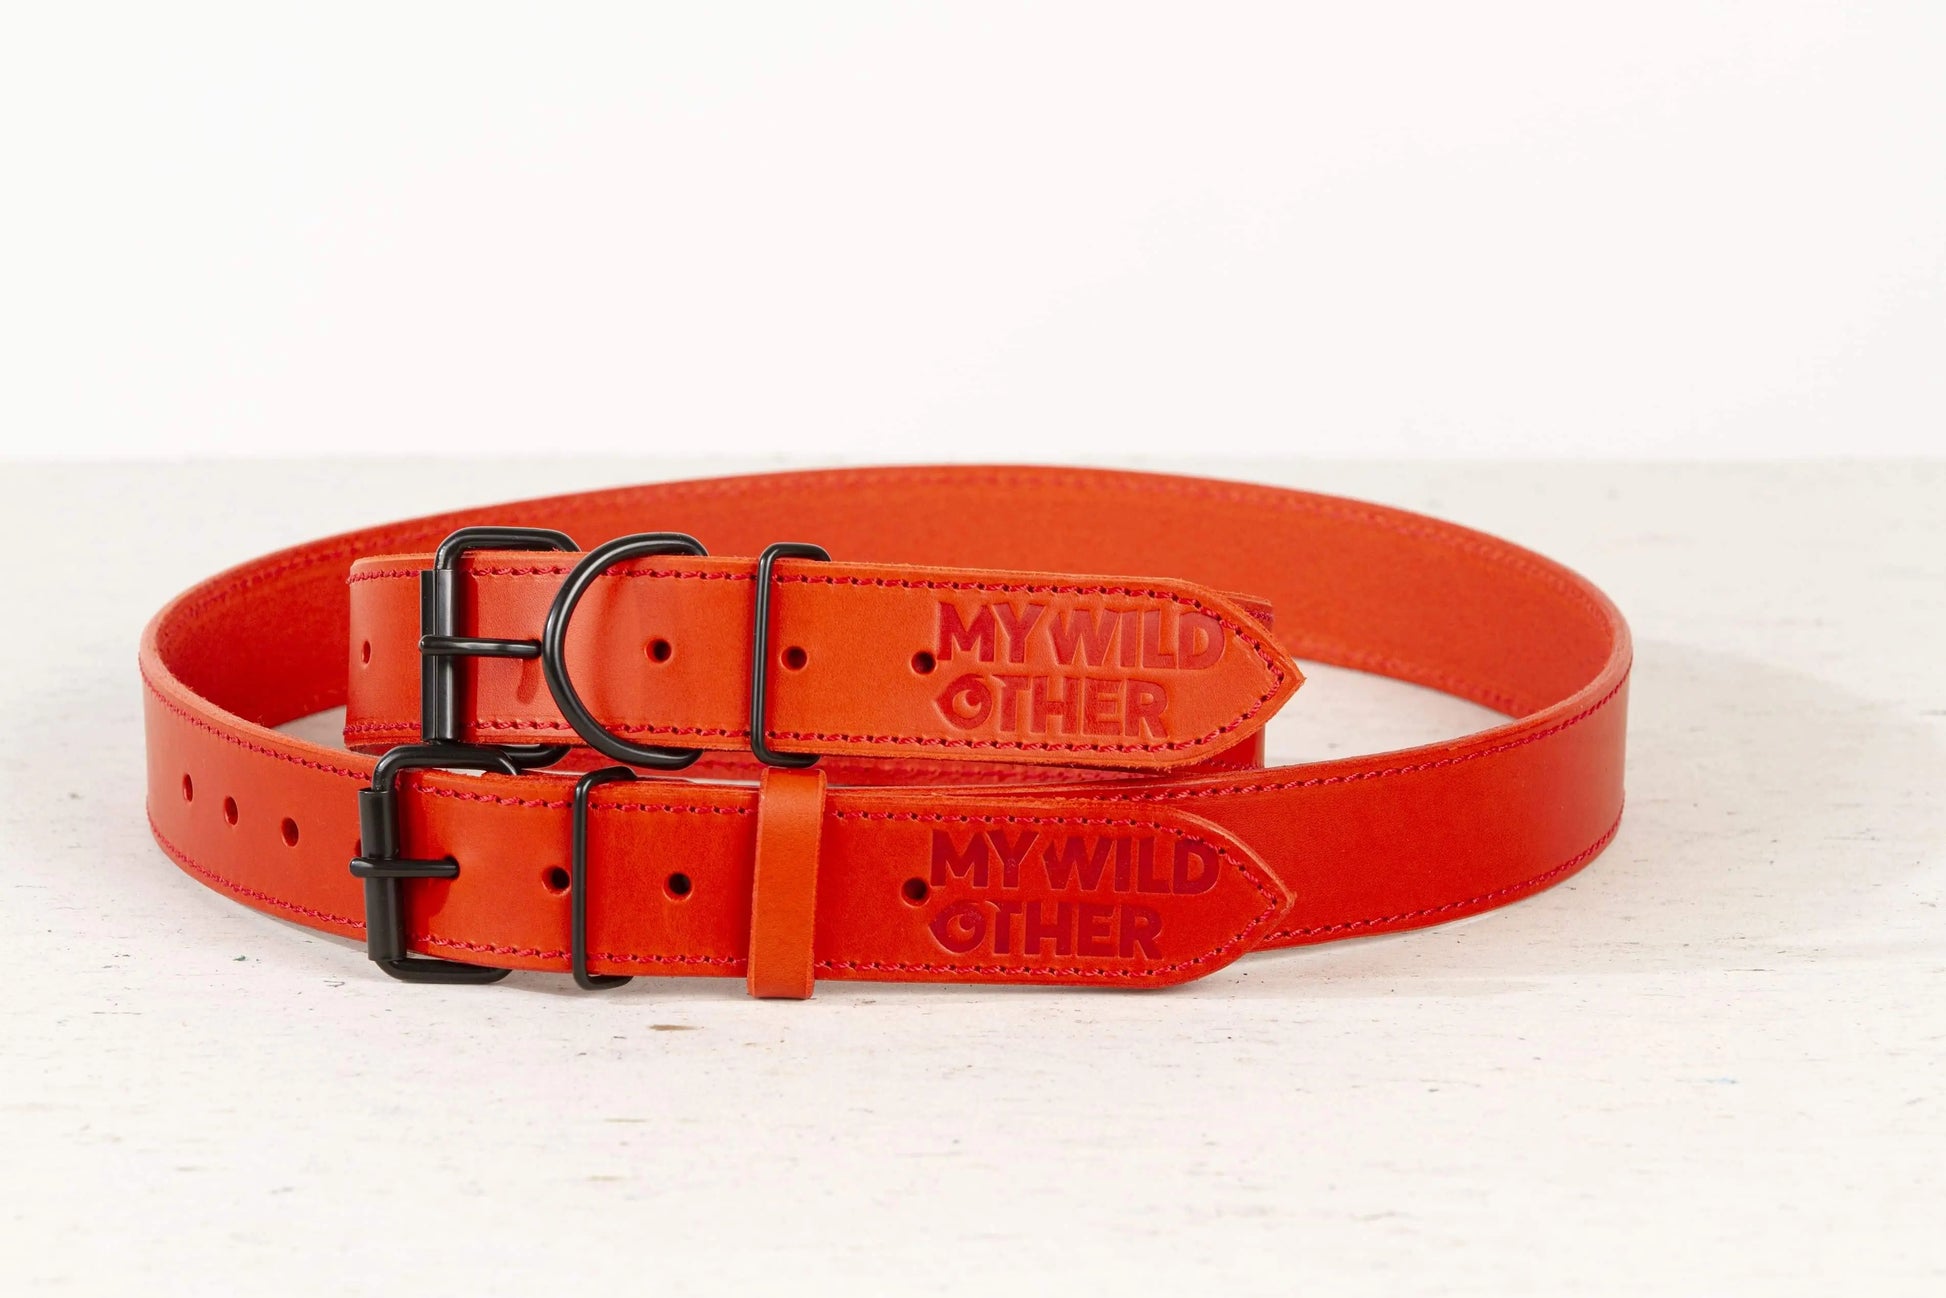 Handmade red leather dog collar - premium dog goods handmade in Europe by animalistus